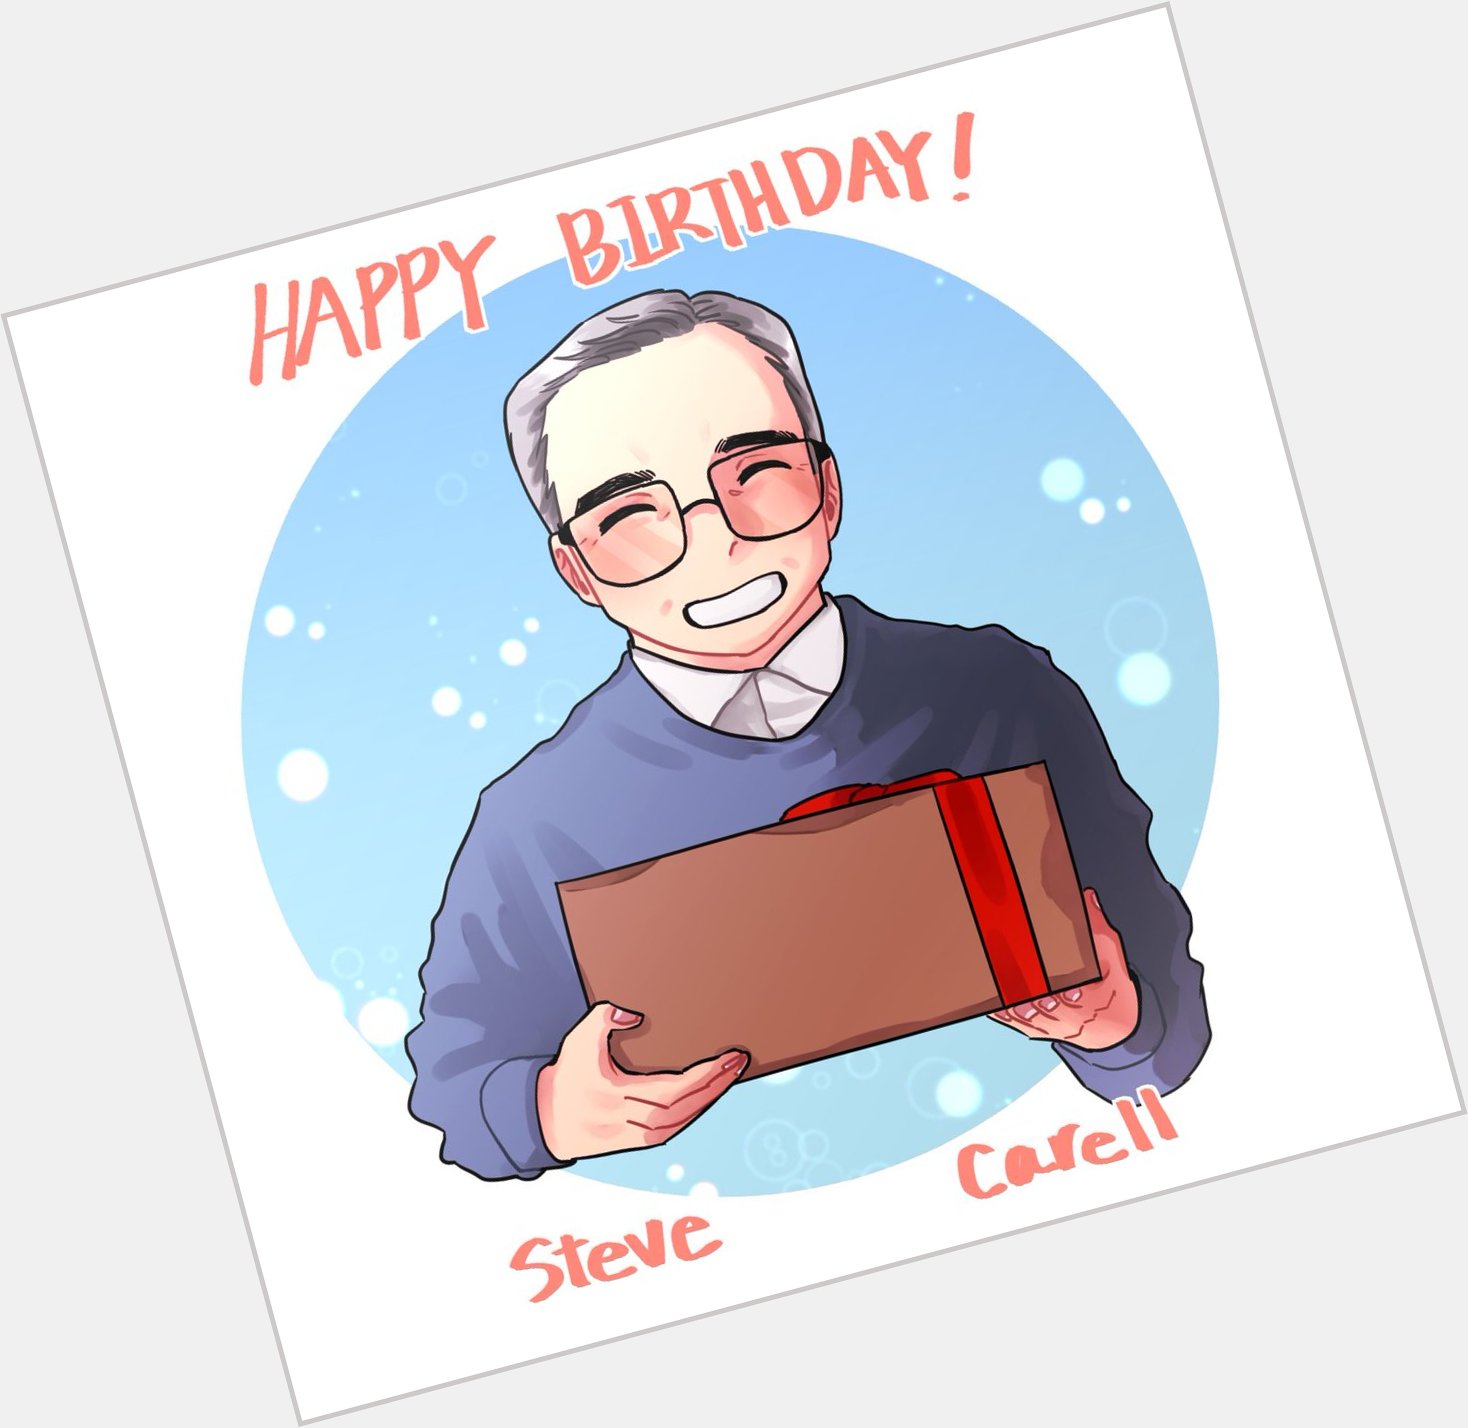         ?  ?
8 16           ??       Steve carell Happy Birthday!!! 